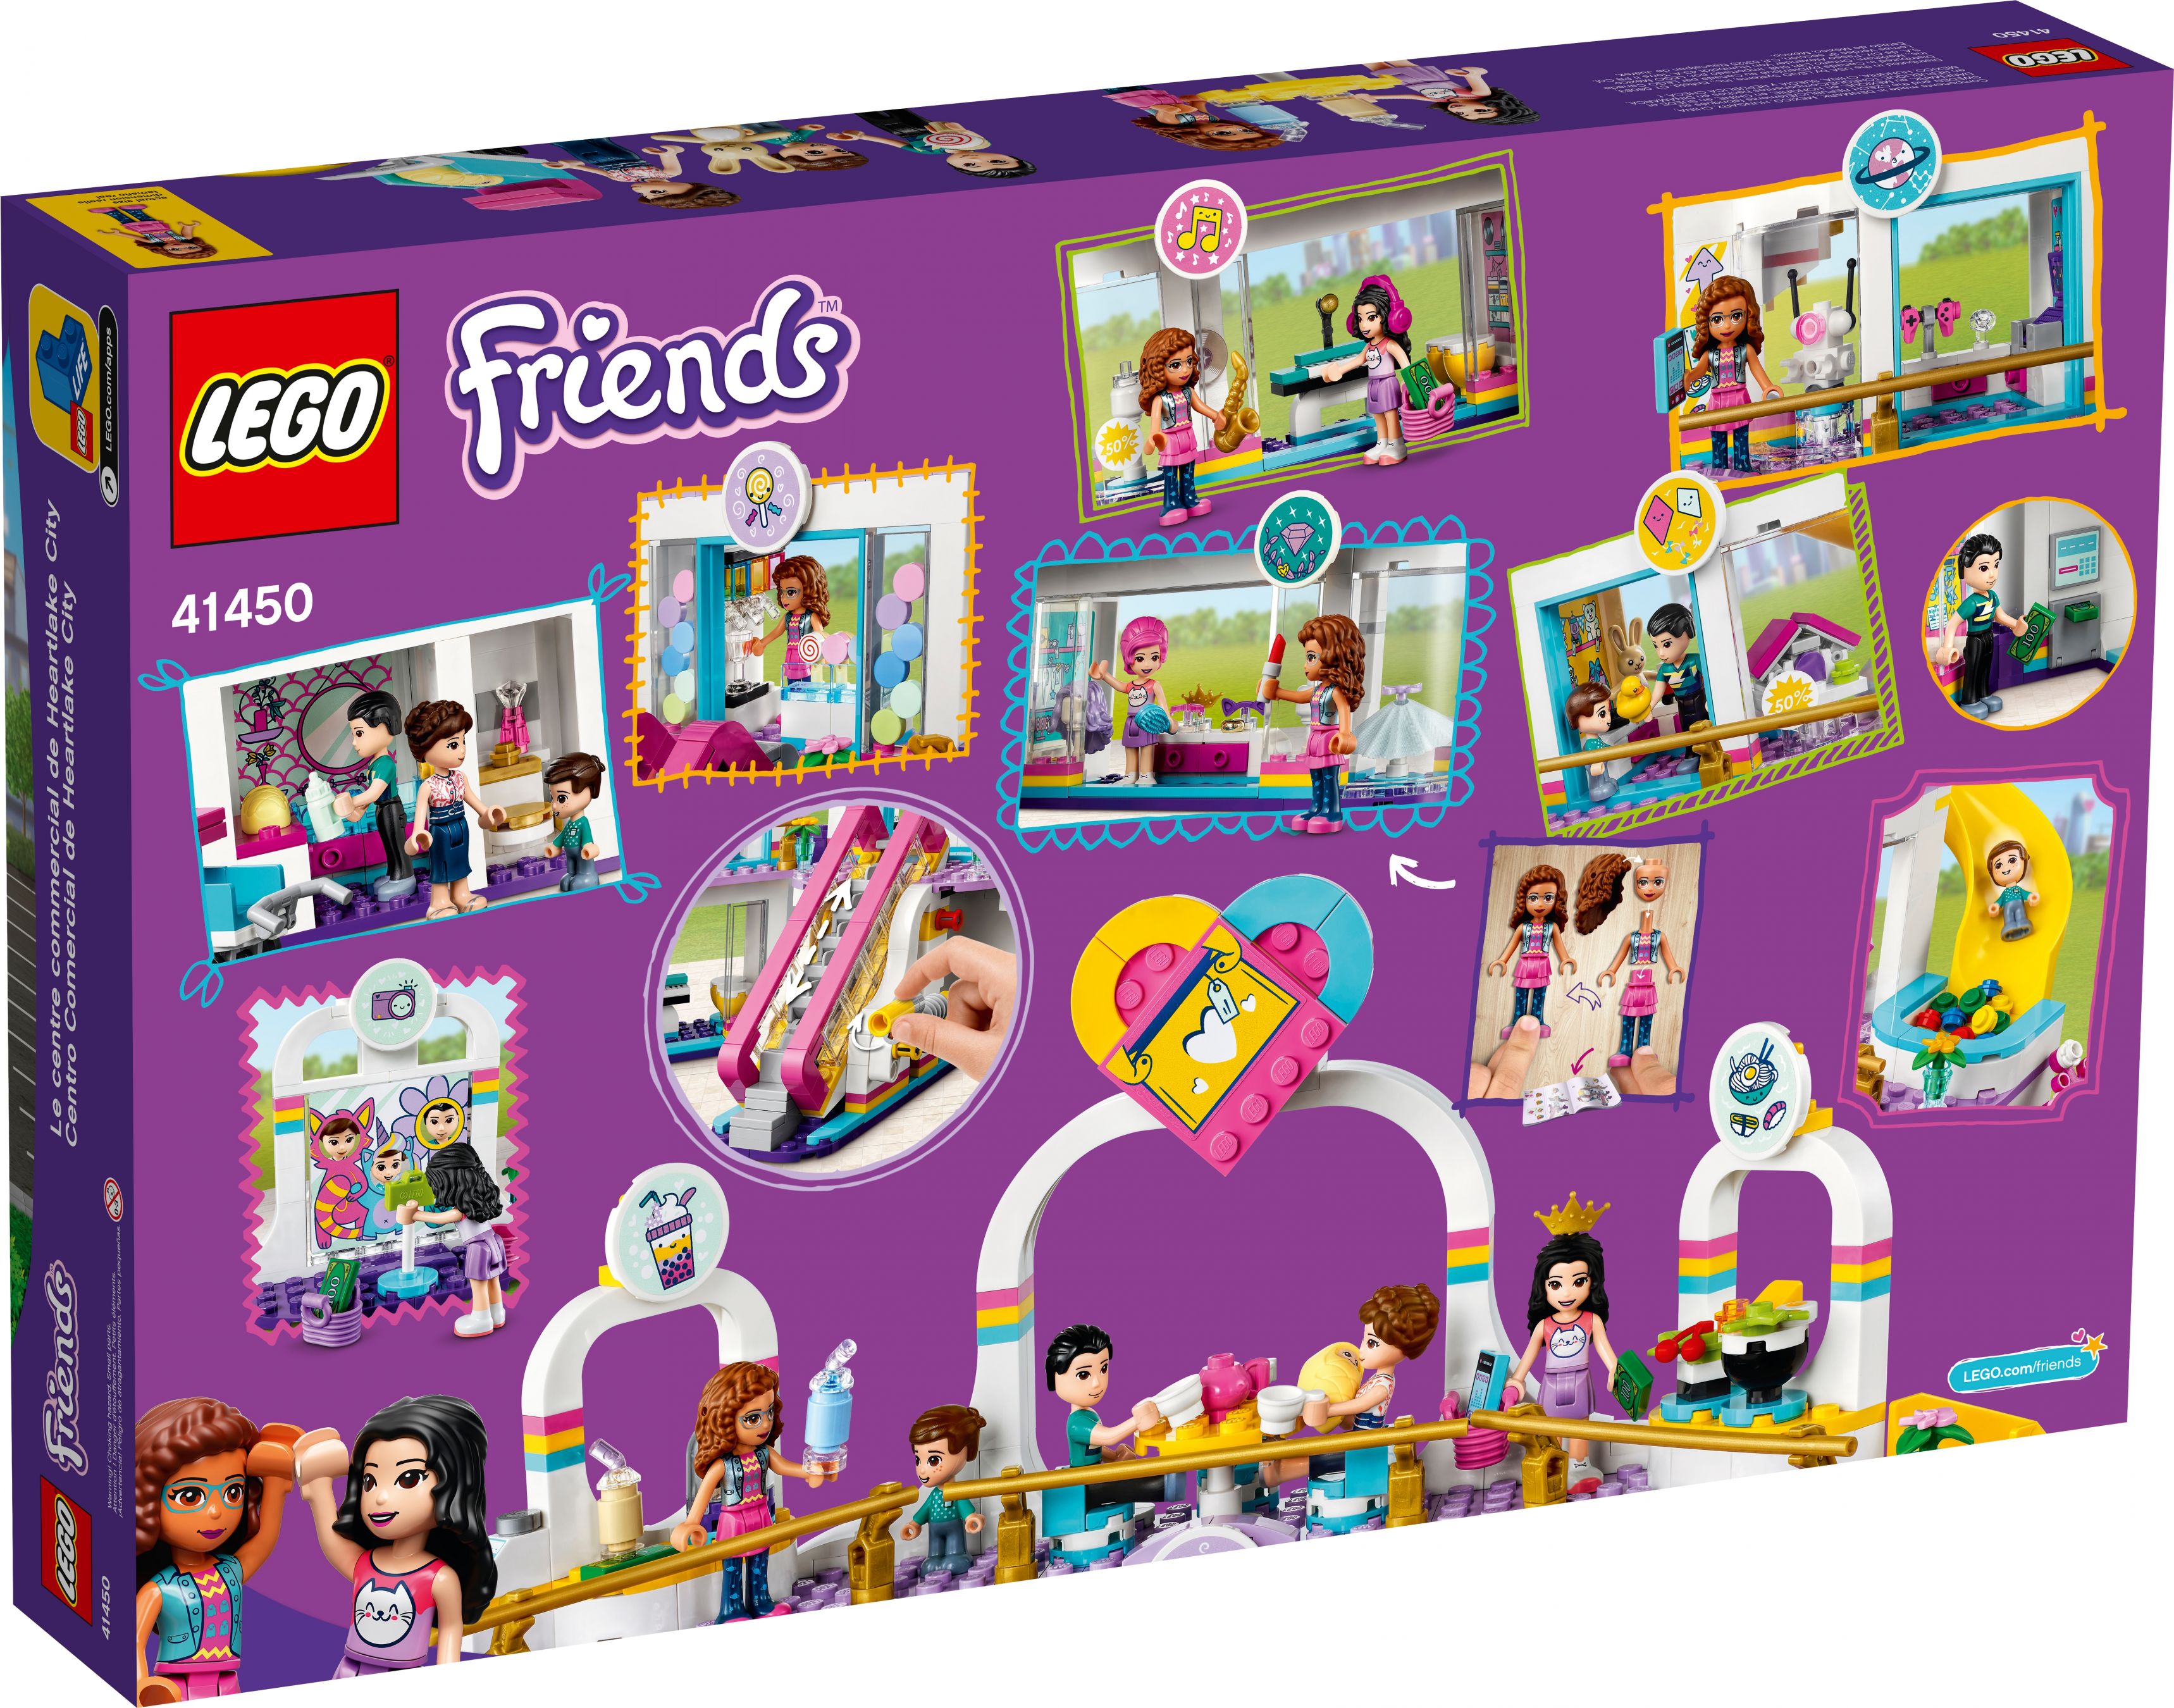 LEGO Friends 41450 Heartlake City Kaufhaus LEGO_41450_alt15.jpg